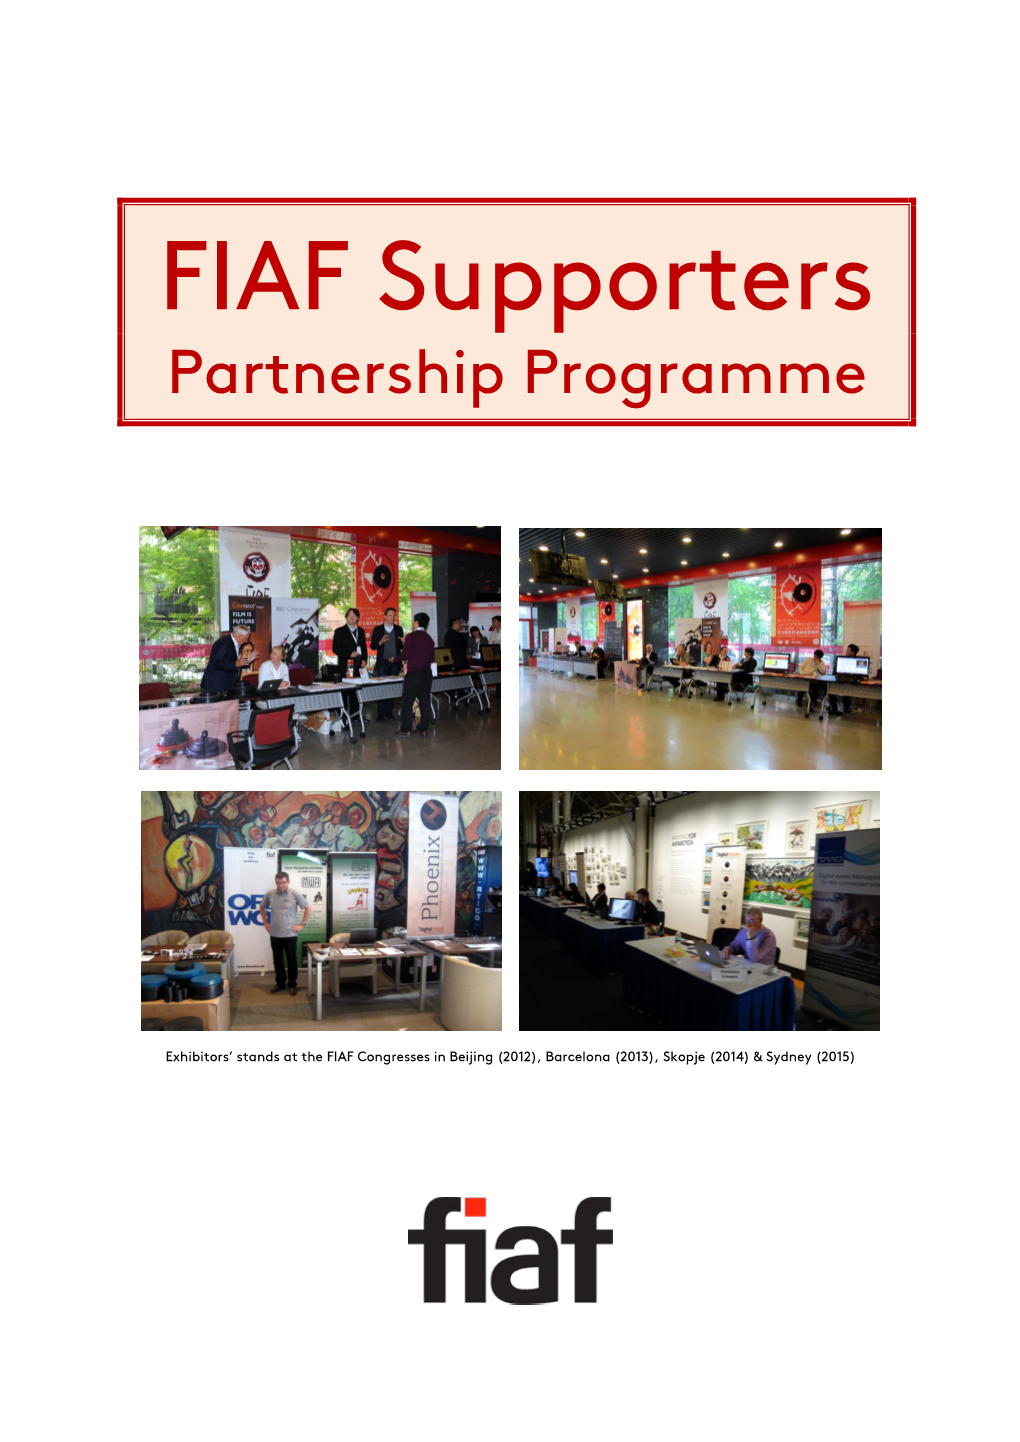 FIAF Supporters Partnership Programme